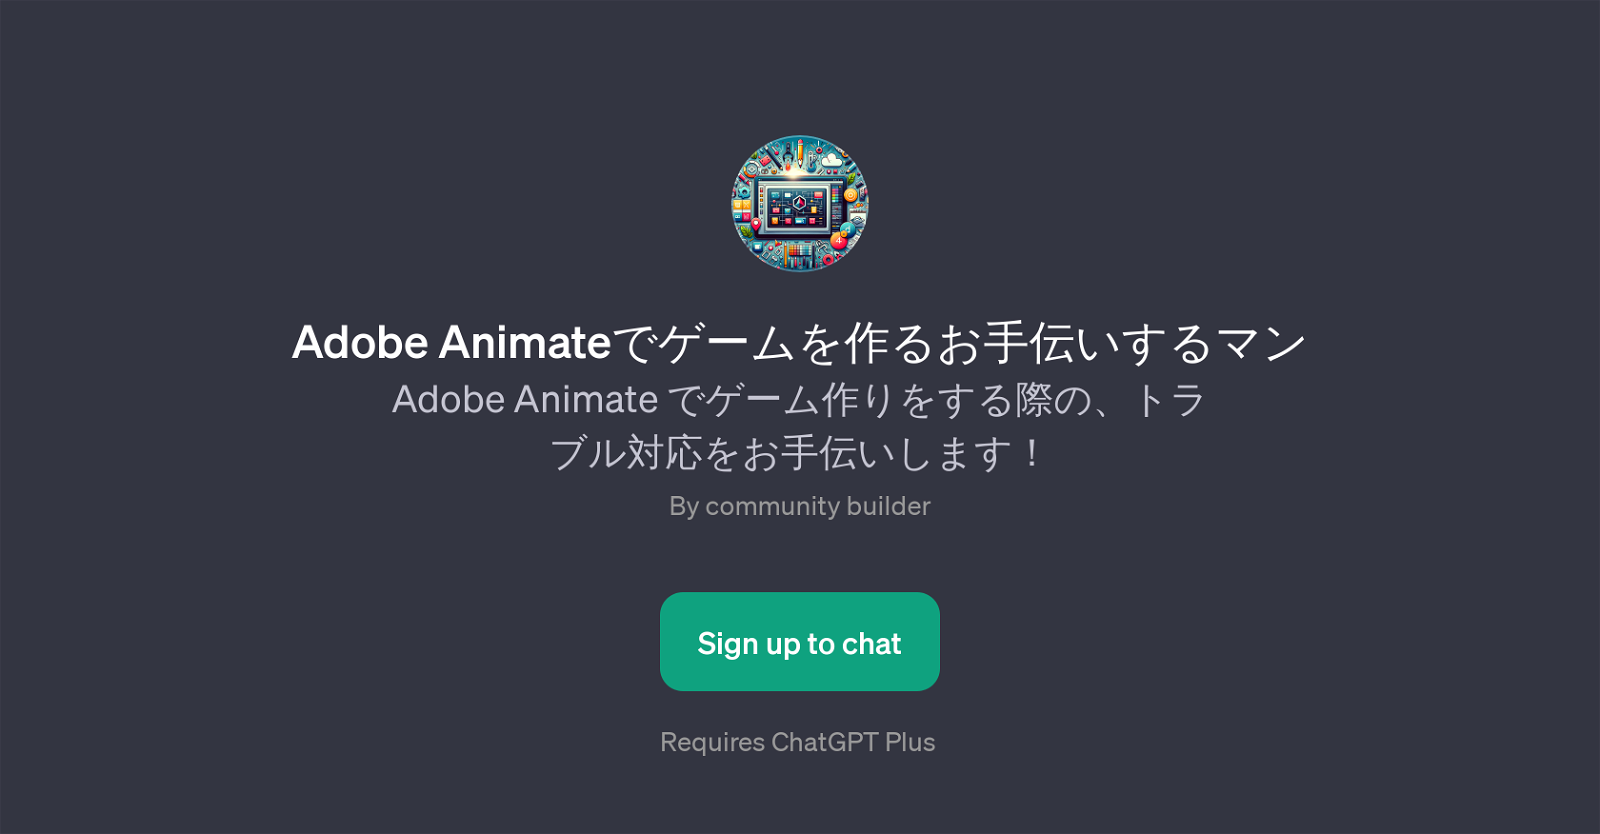 Adobe Animate Assistance website